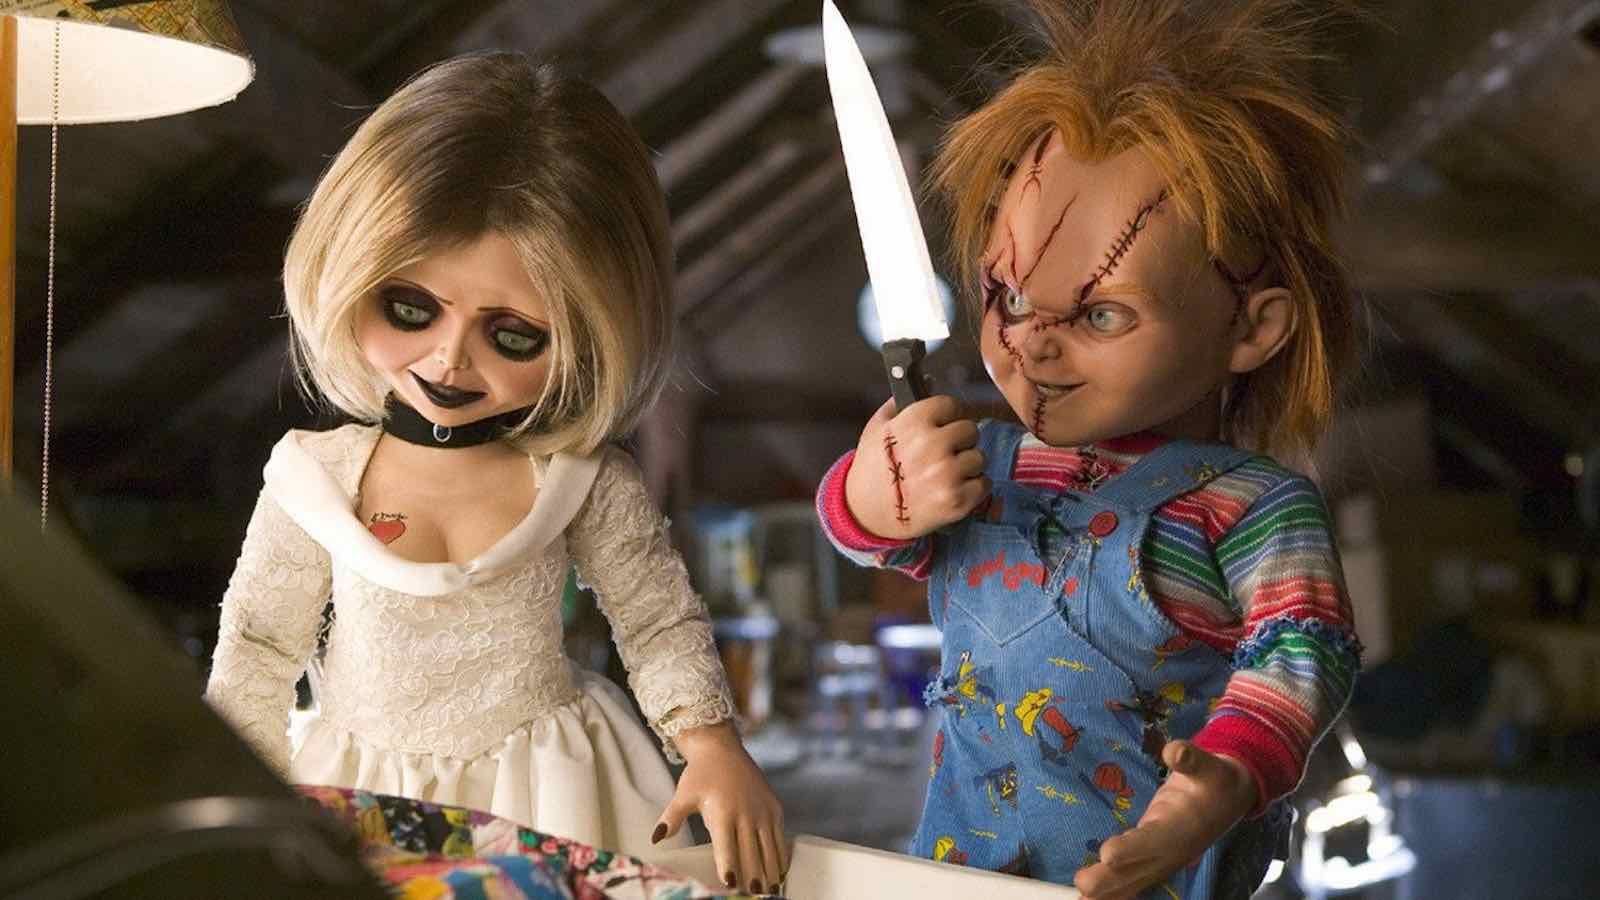 Full Curse of Chucky Storyline By IMDB.